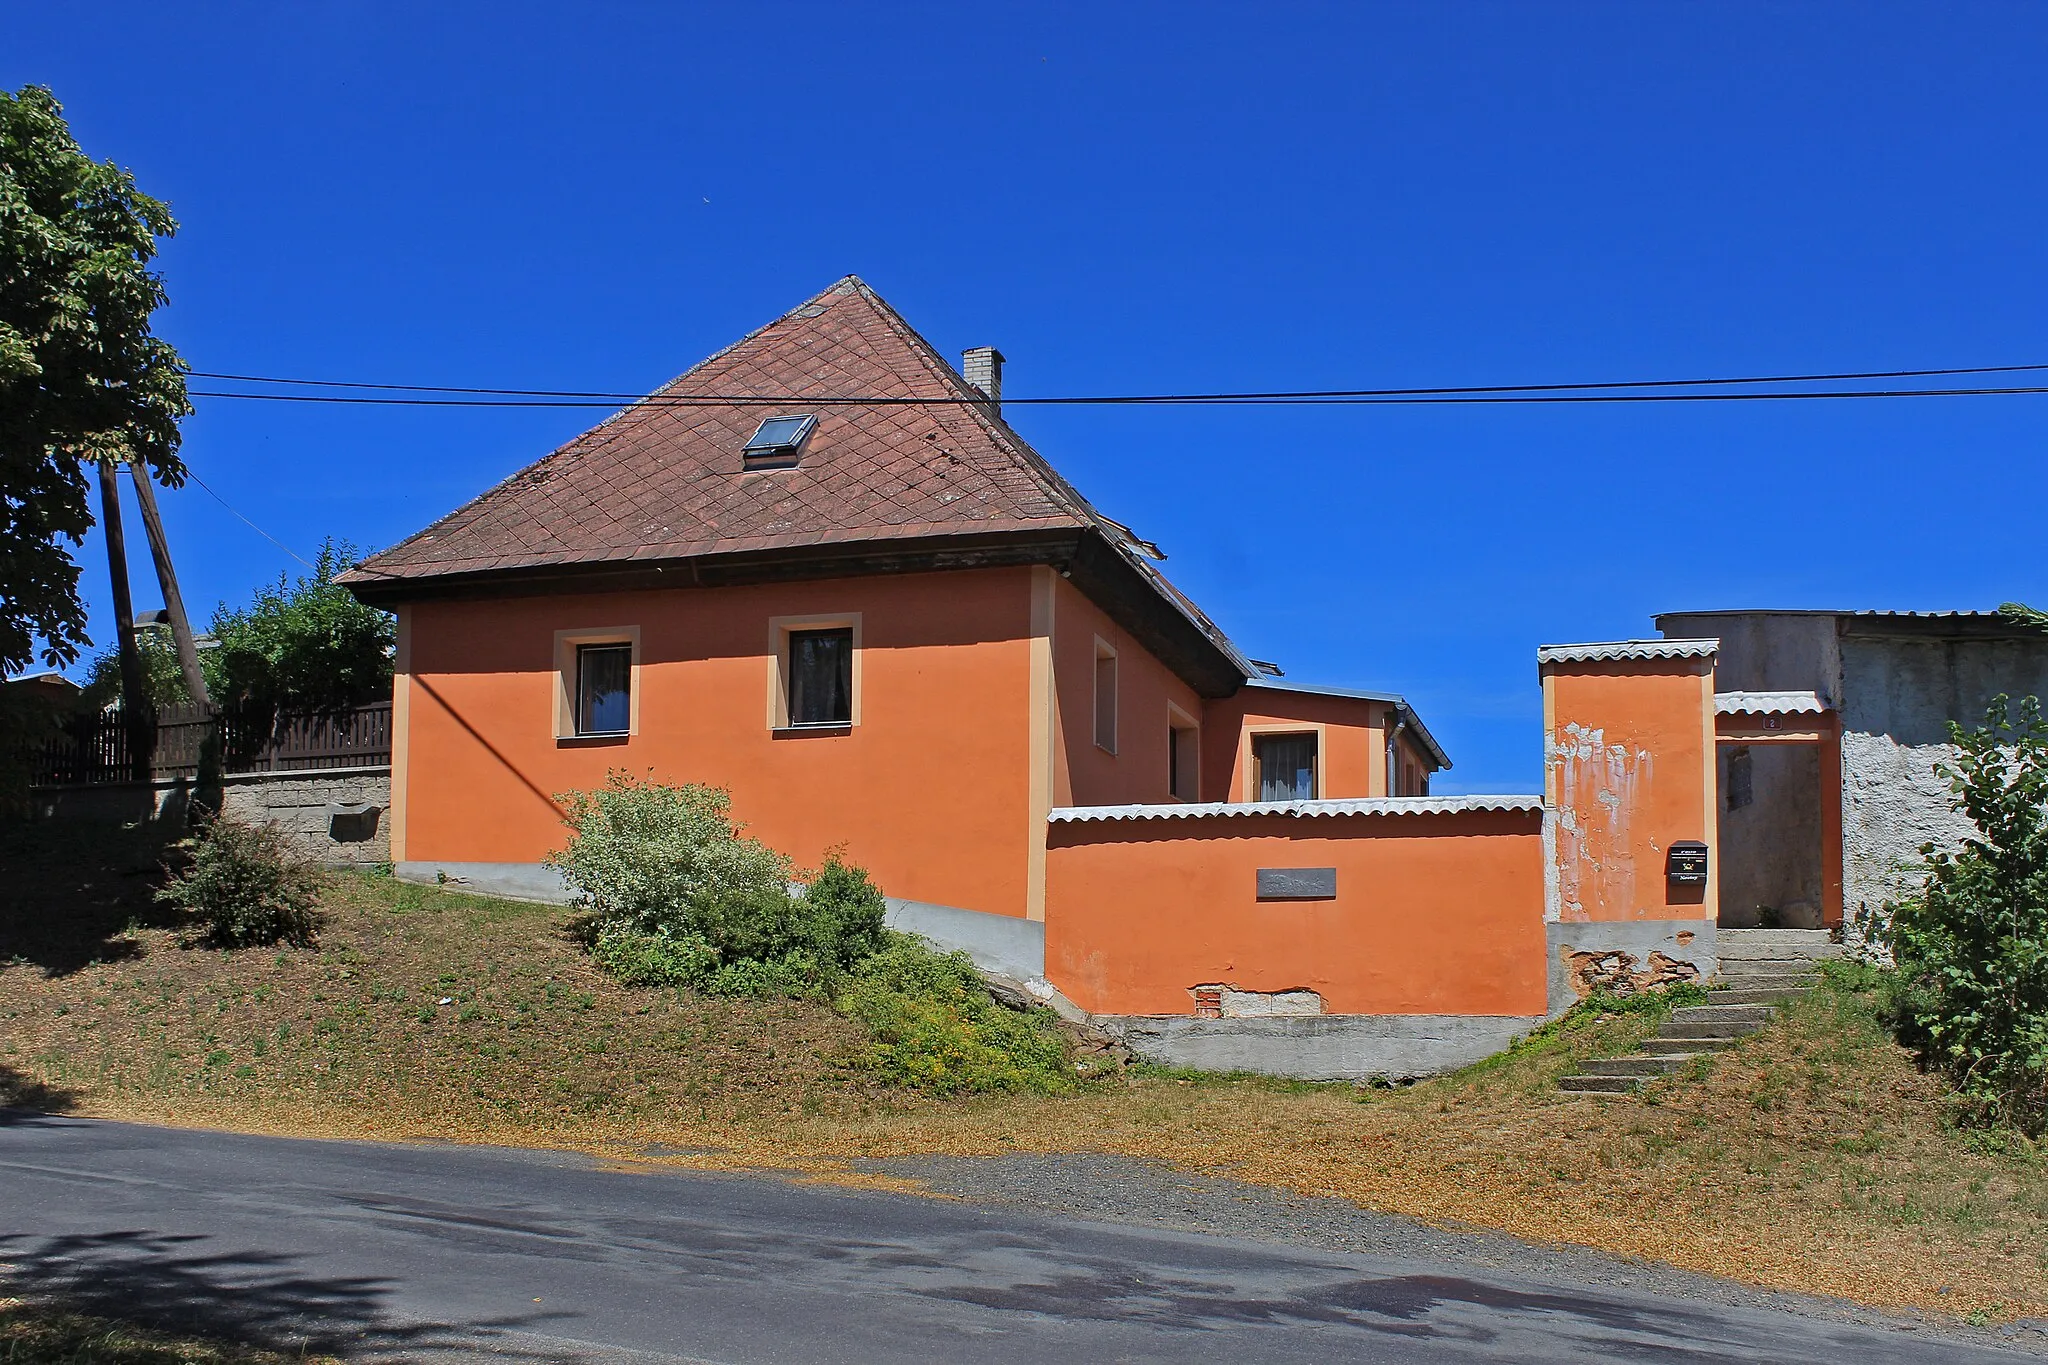 Photo showing: House No 2 in Vlkanov, Czech Republic.